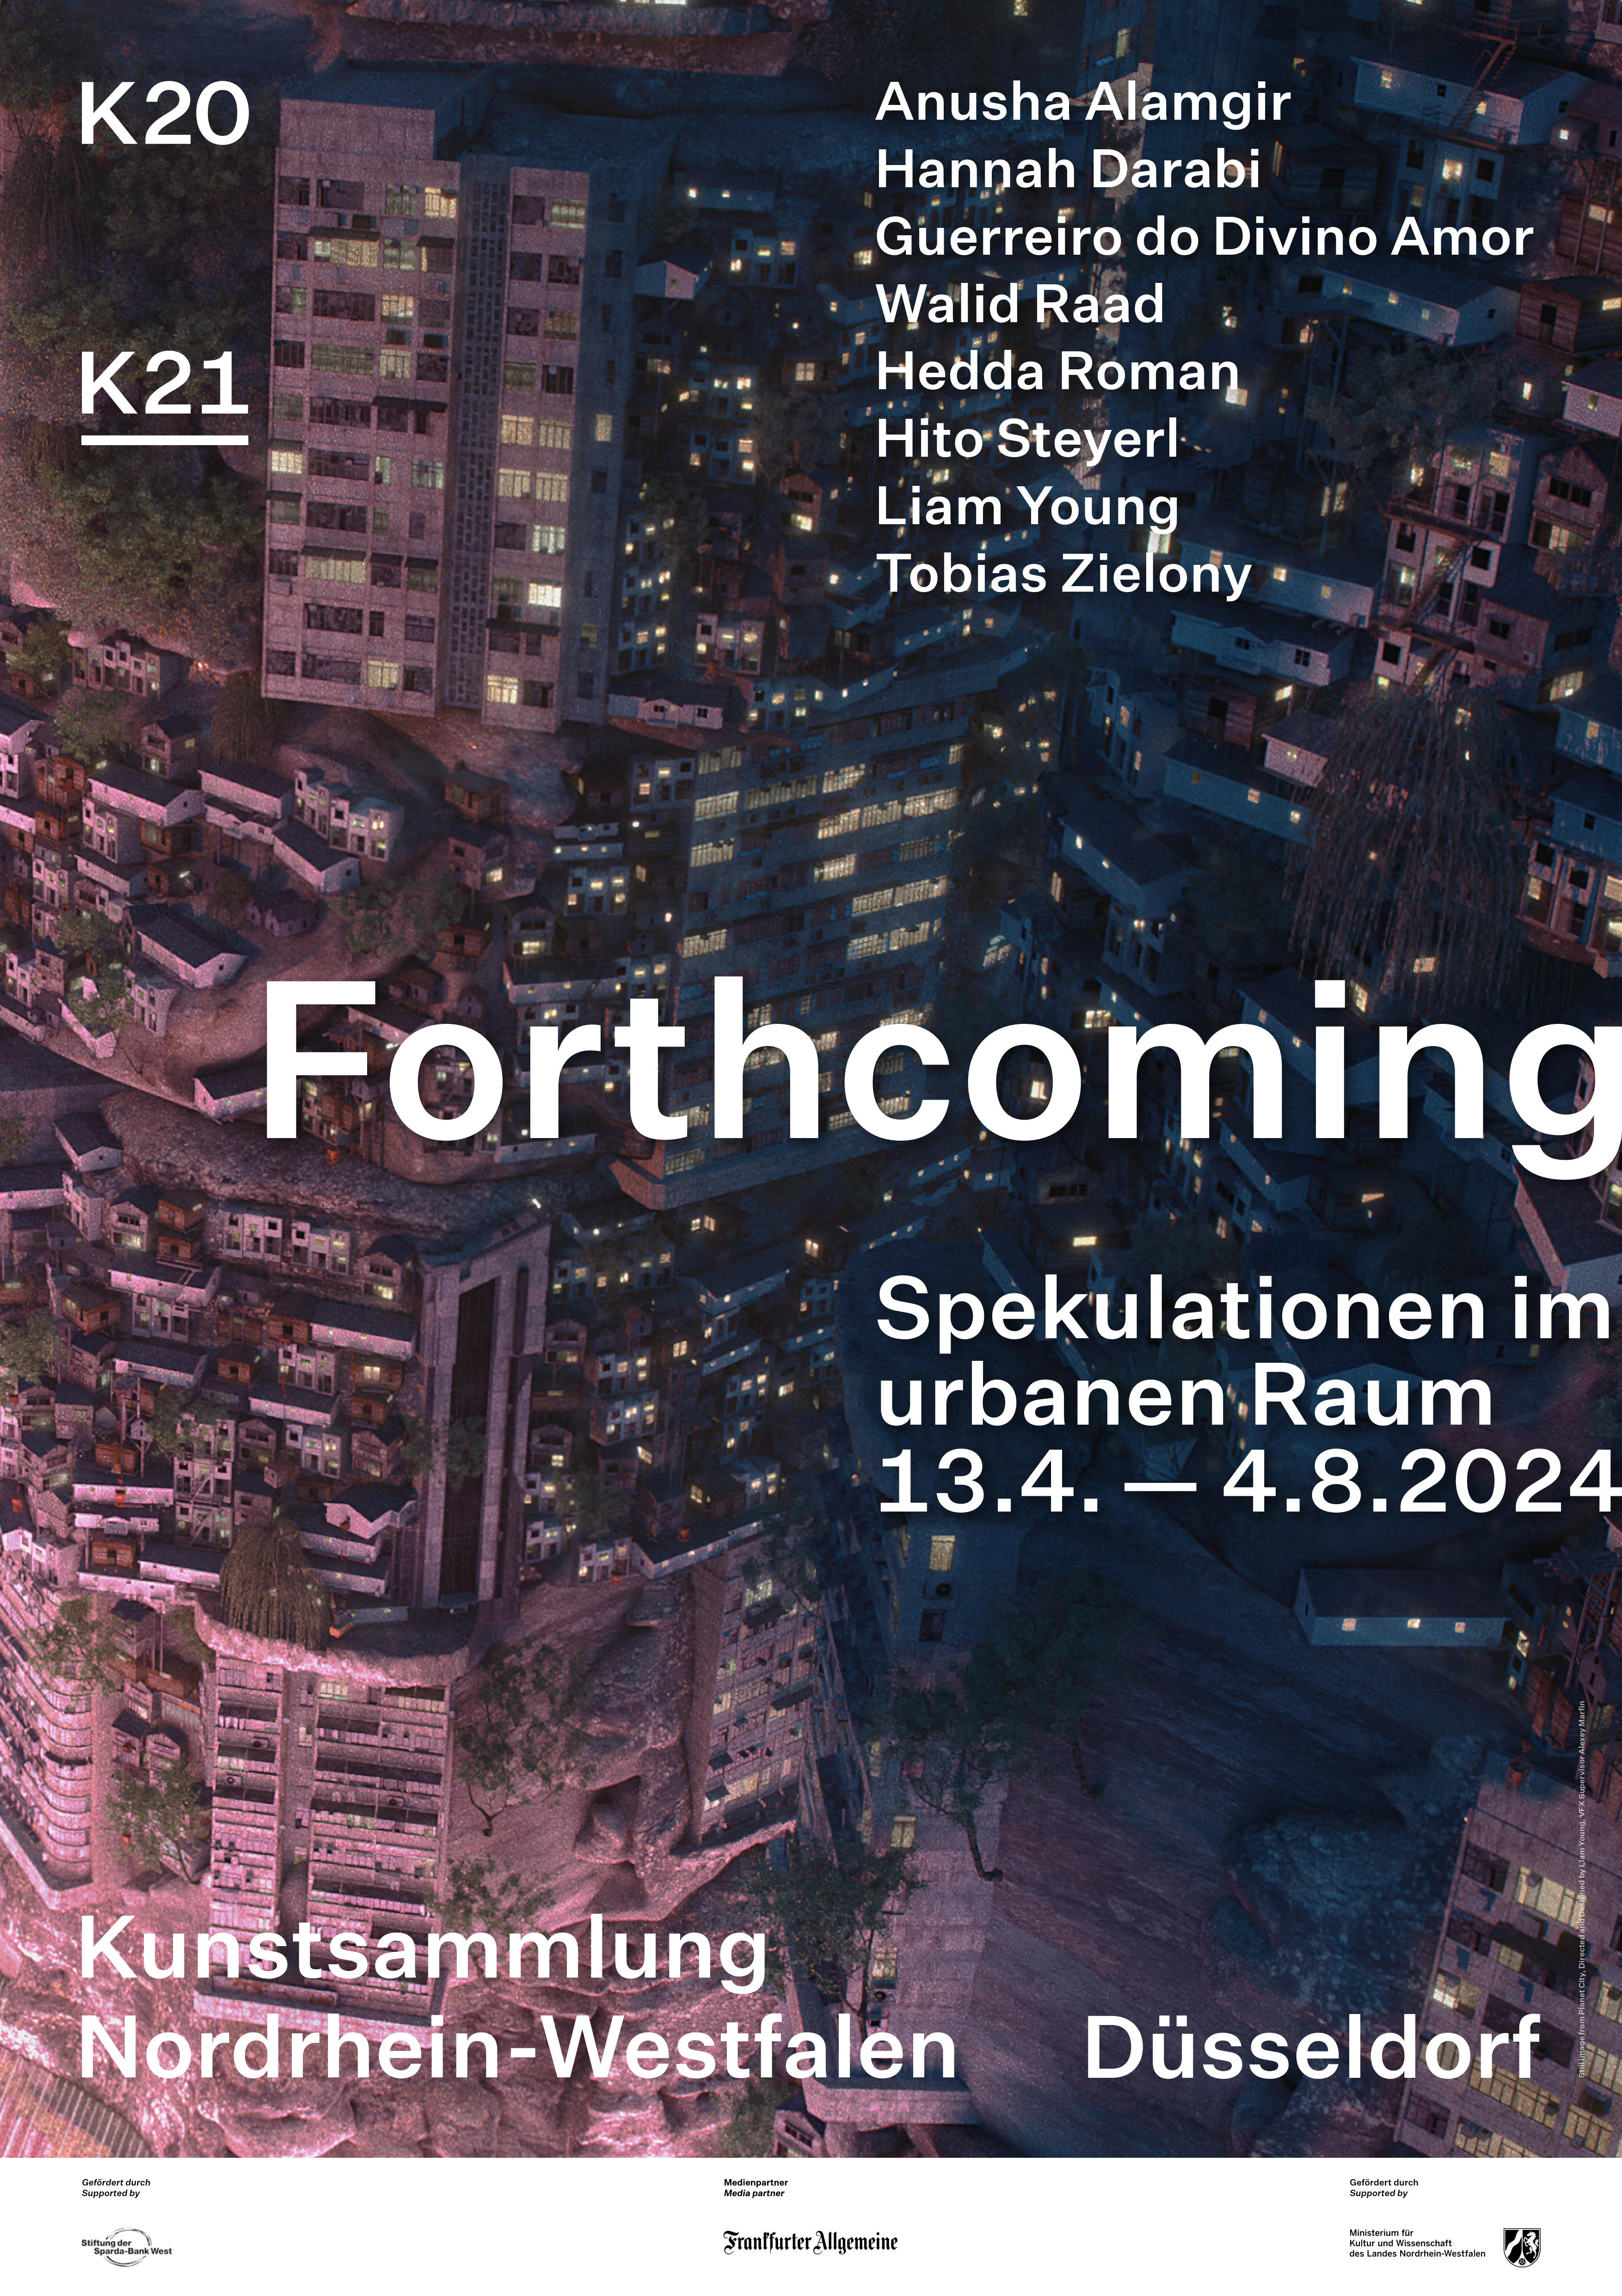 Poster Forthcoming. Spekulationen im urbanen Raum.